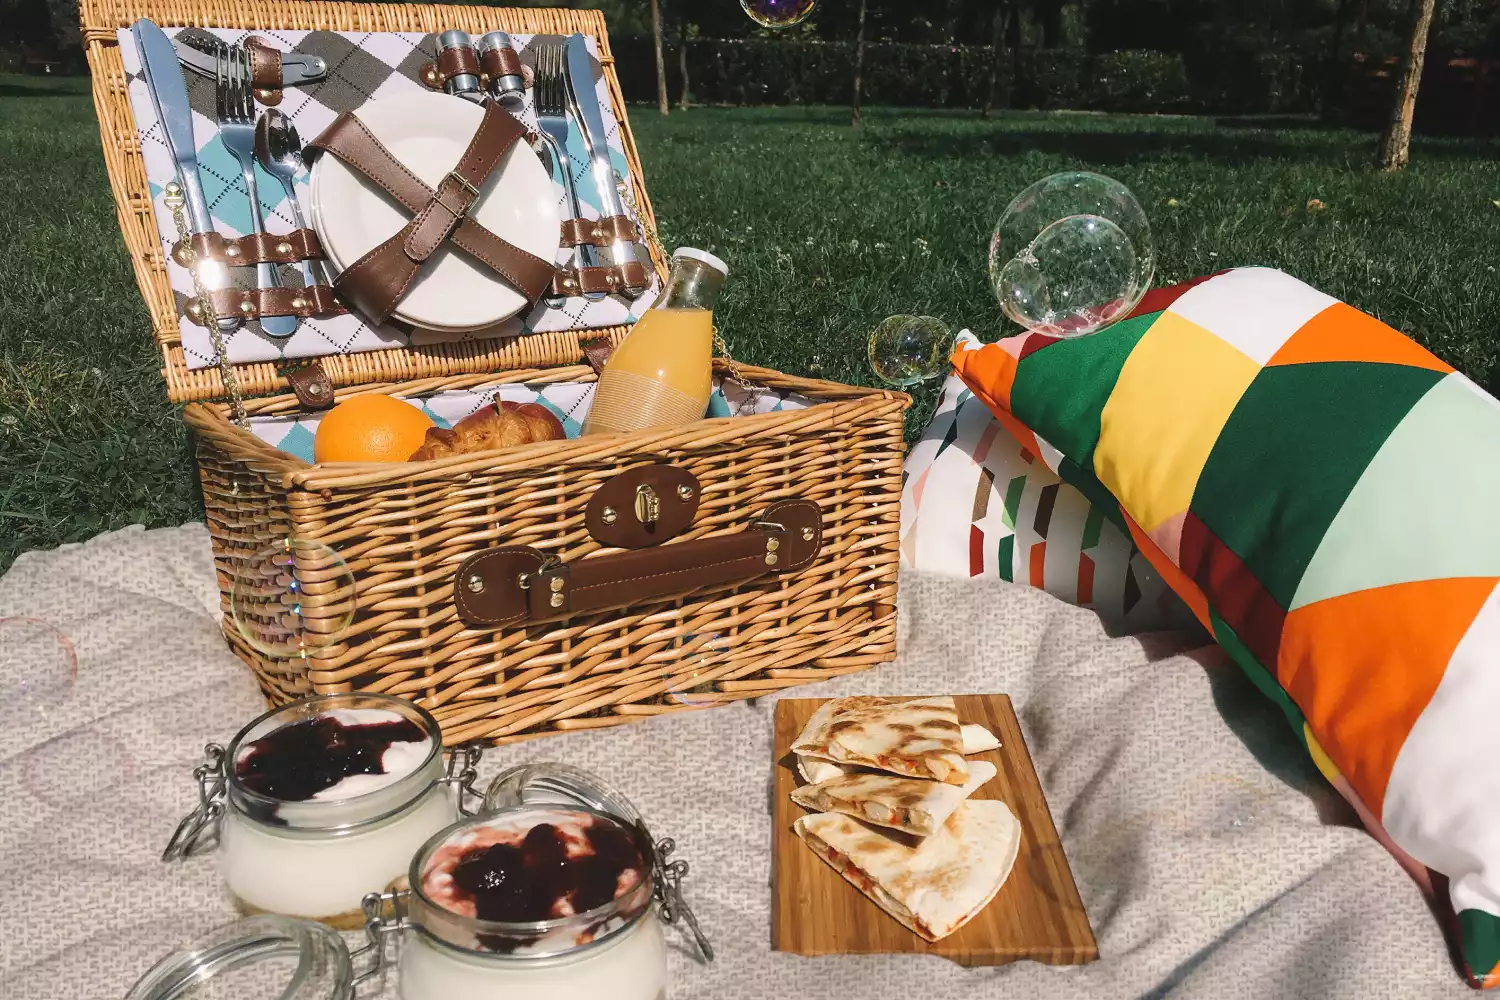 branded picnic blankets